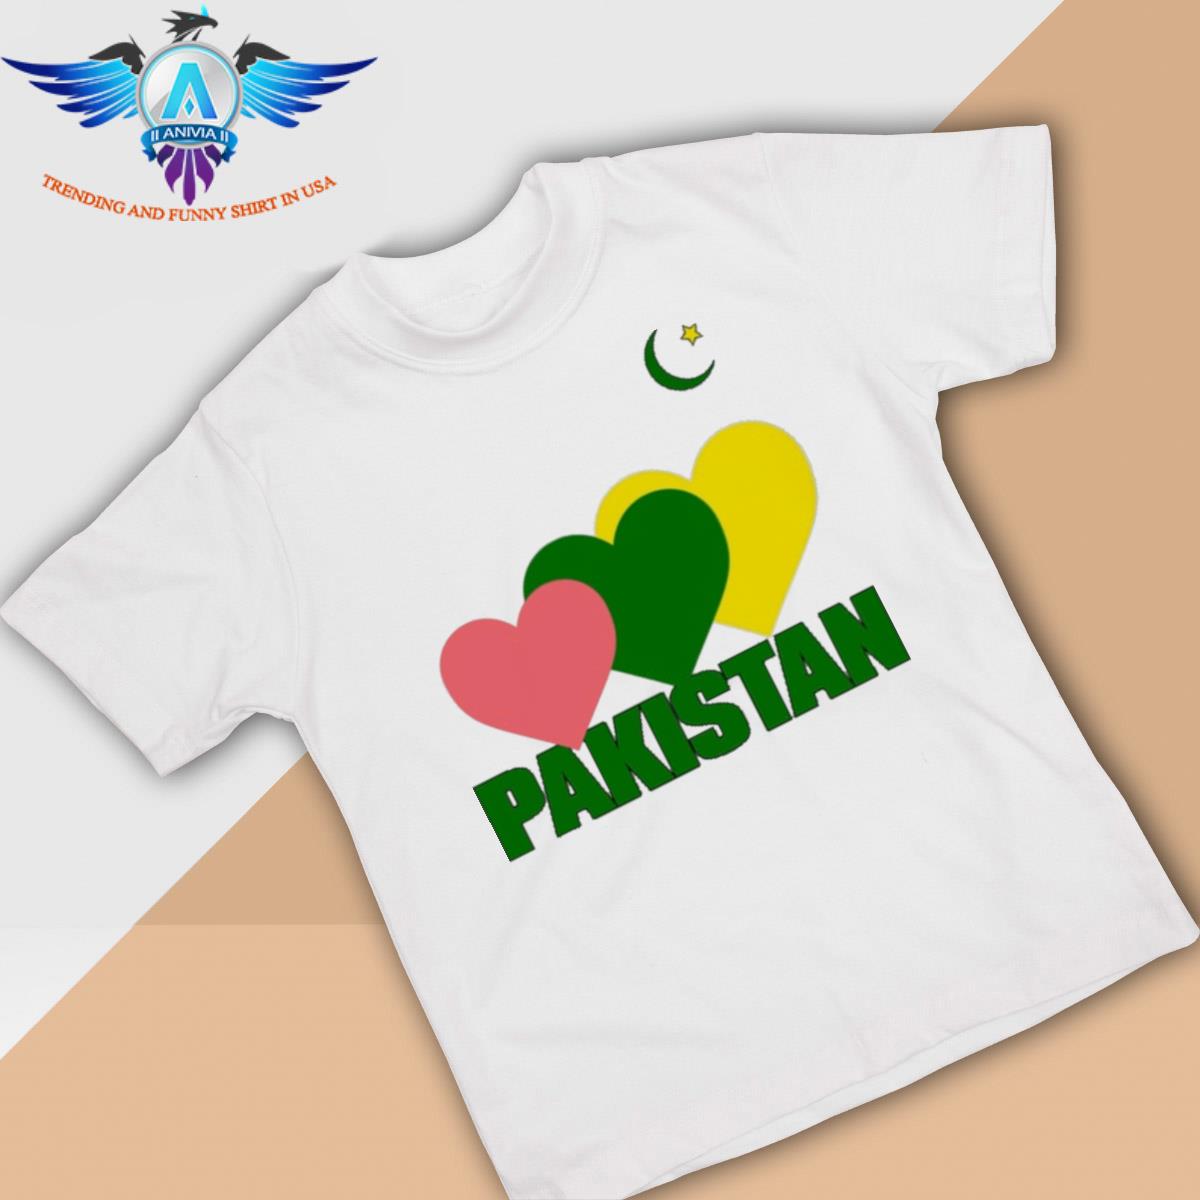 Pakistan Relief Kamil Abbas Delivers shirt